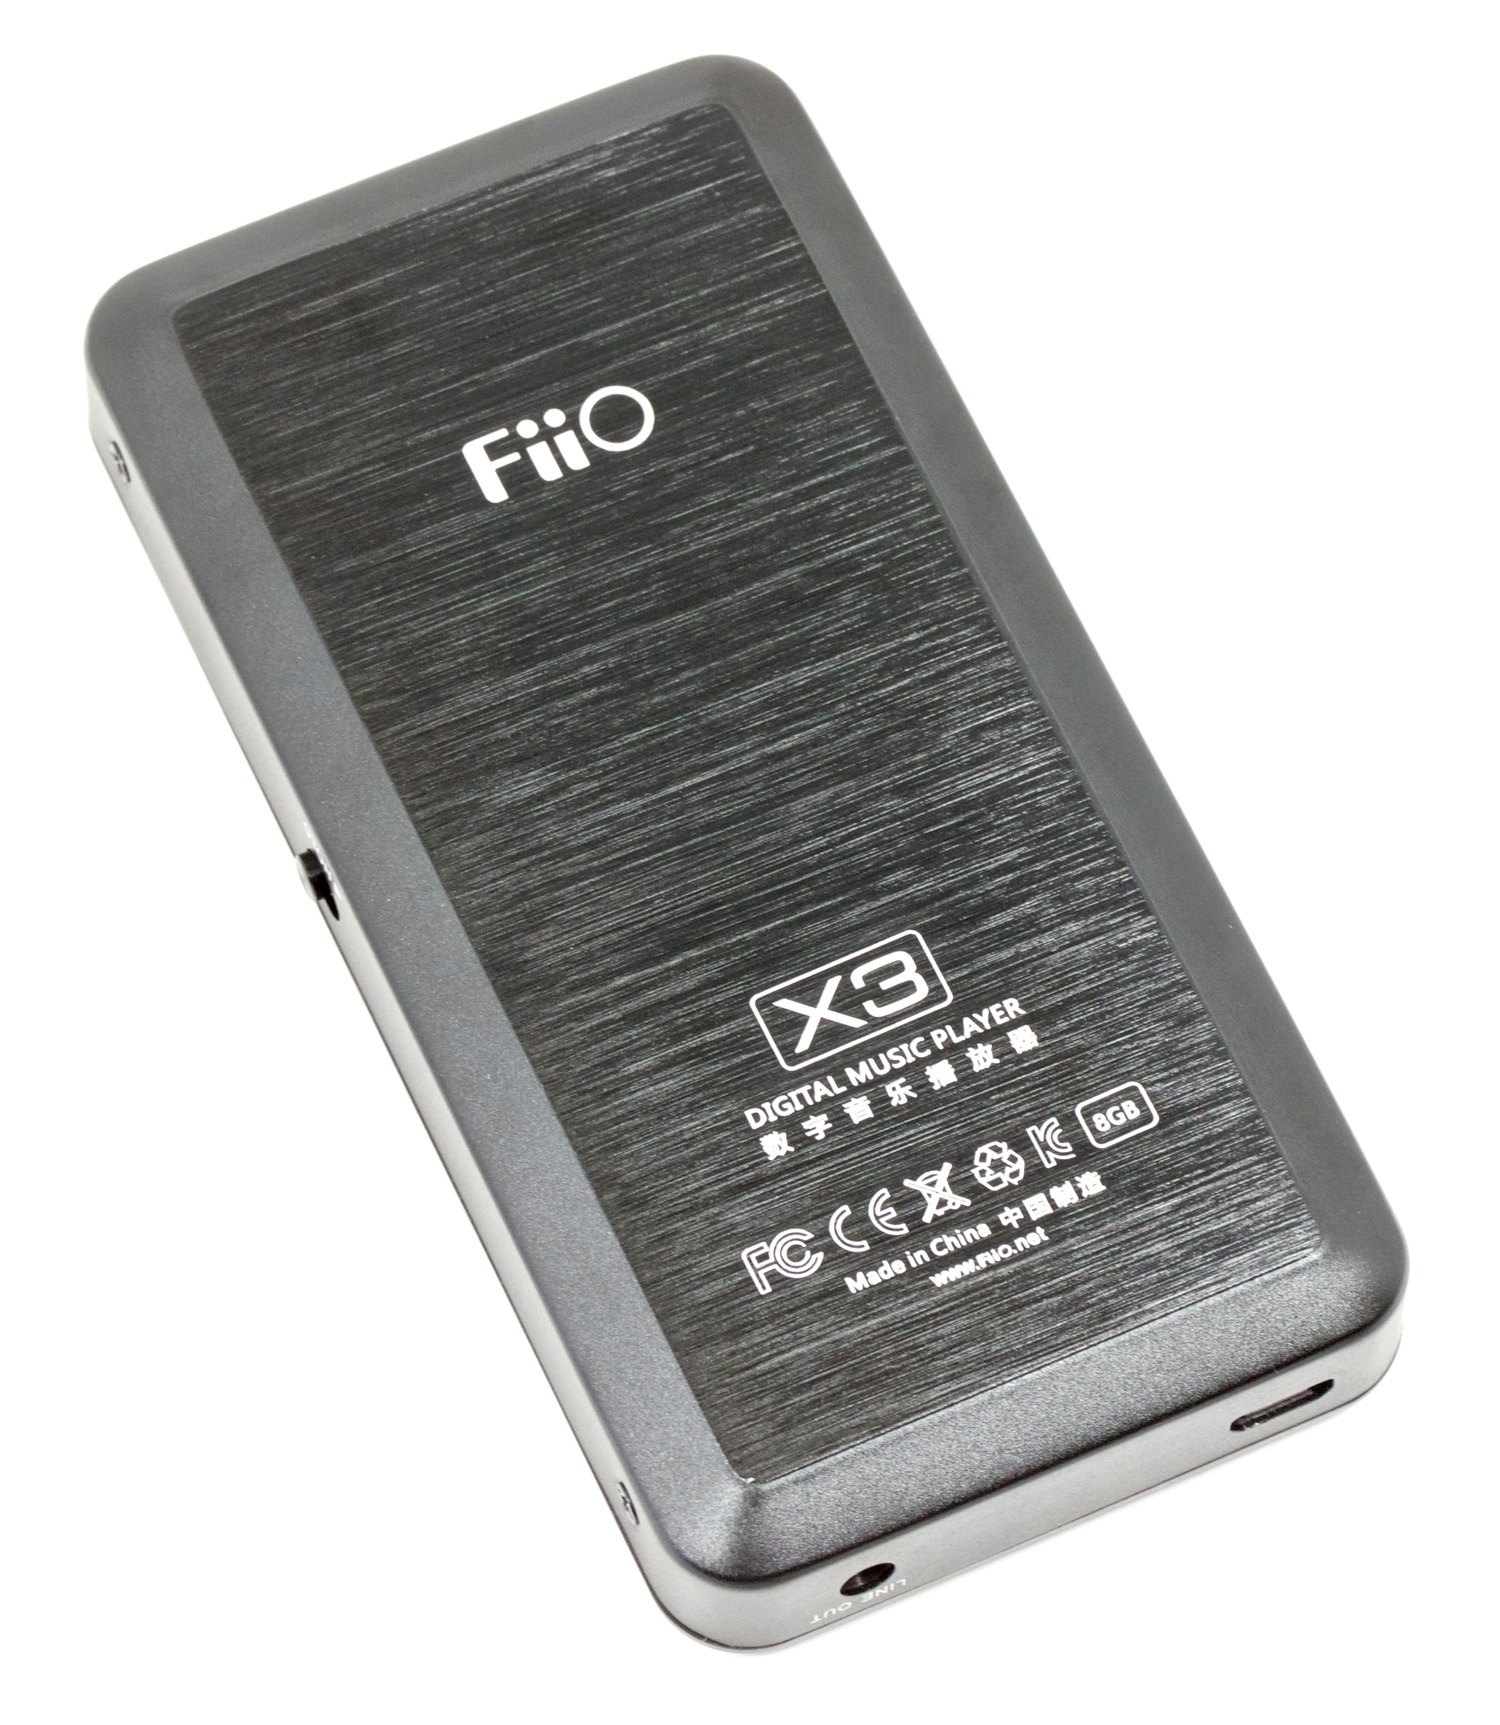 Fiio X3 Audiophile Music Player